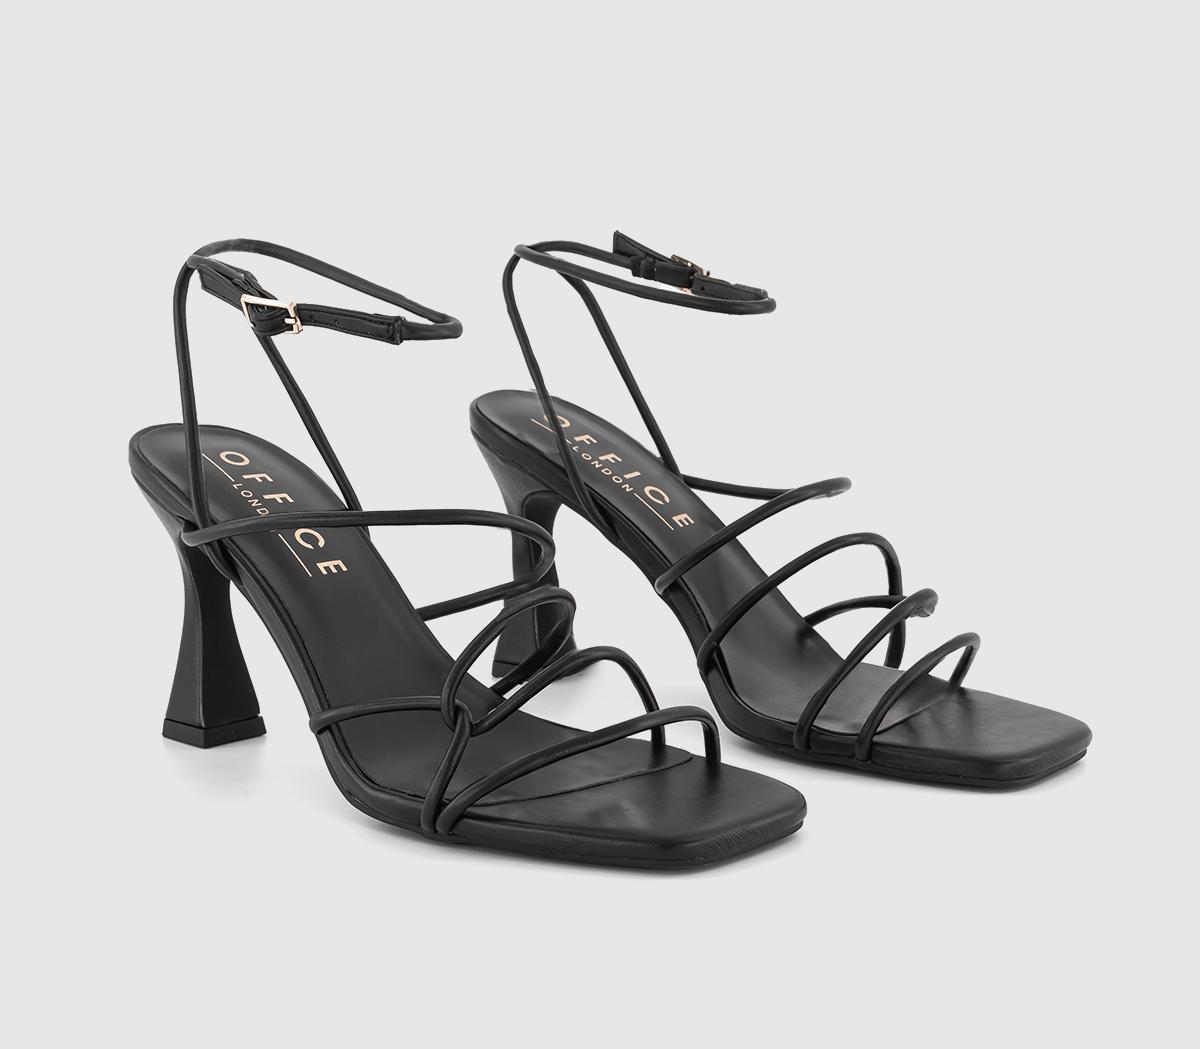 OFFICE Million Dollar Strappy Sandals Black - Women’s Sandals